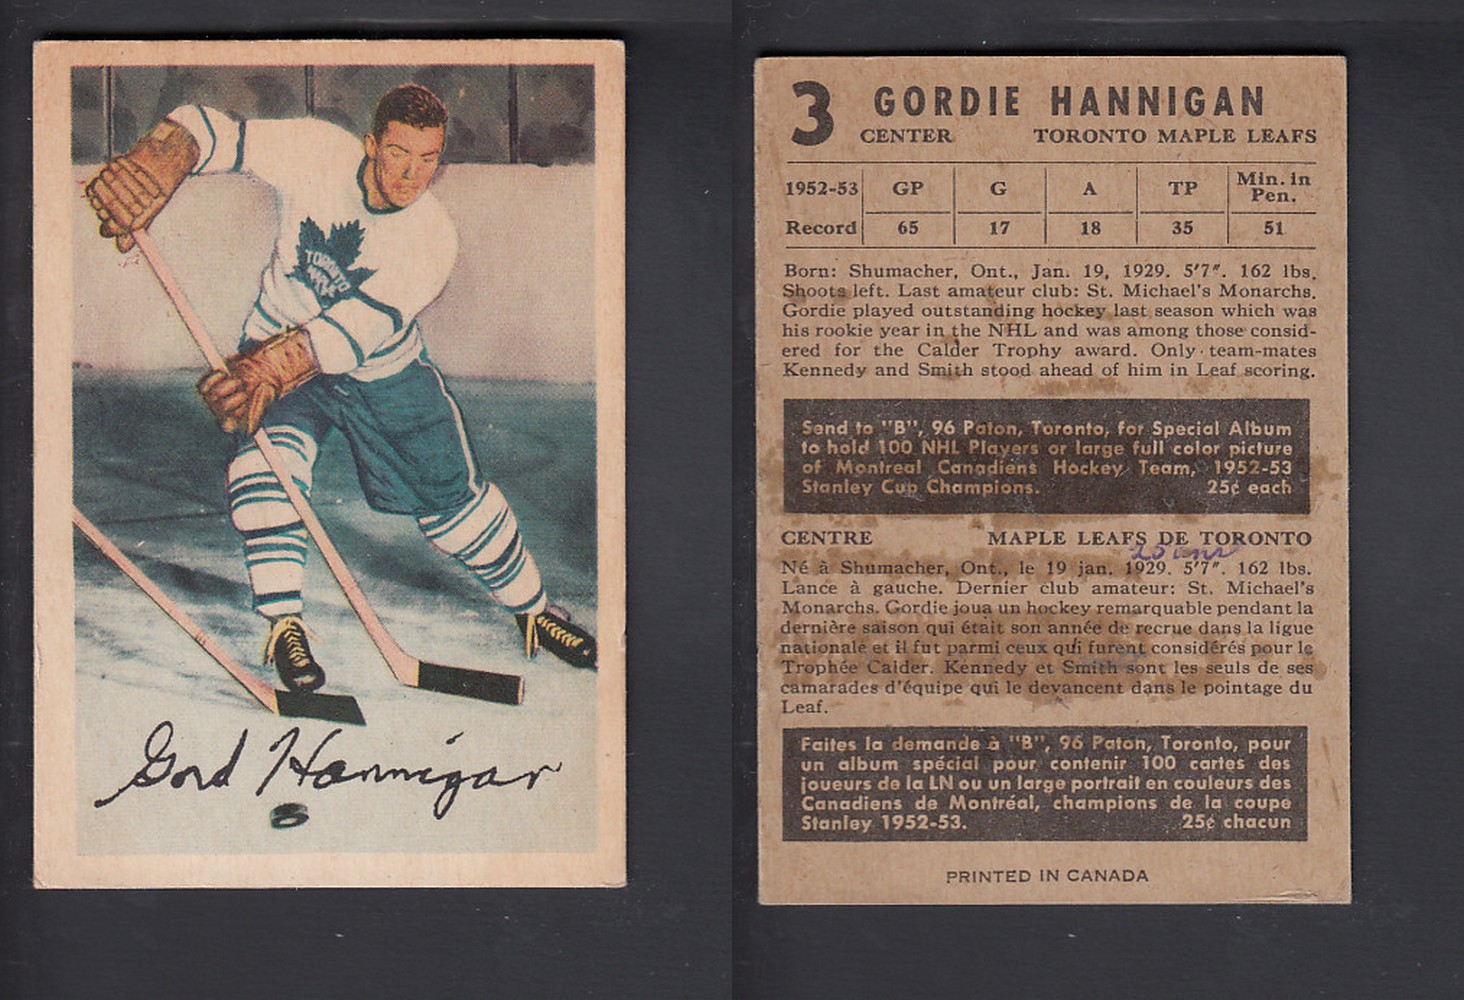 1953-54 PARKHURST HOCKEY CARD #3 G. HANNIGAN photo